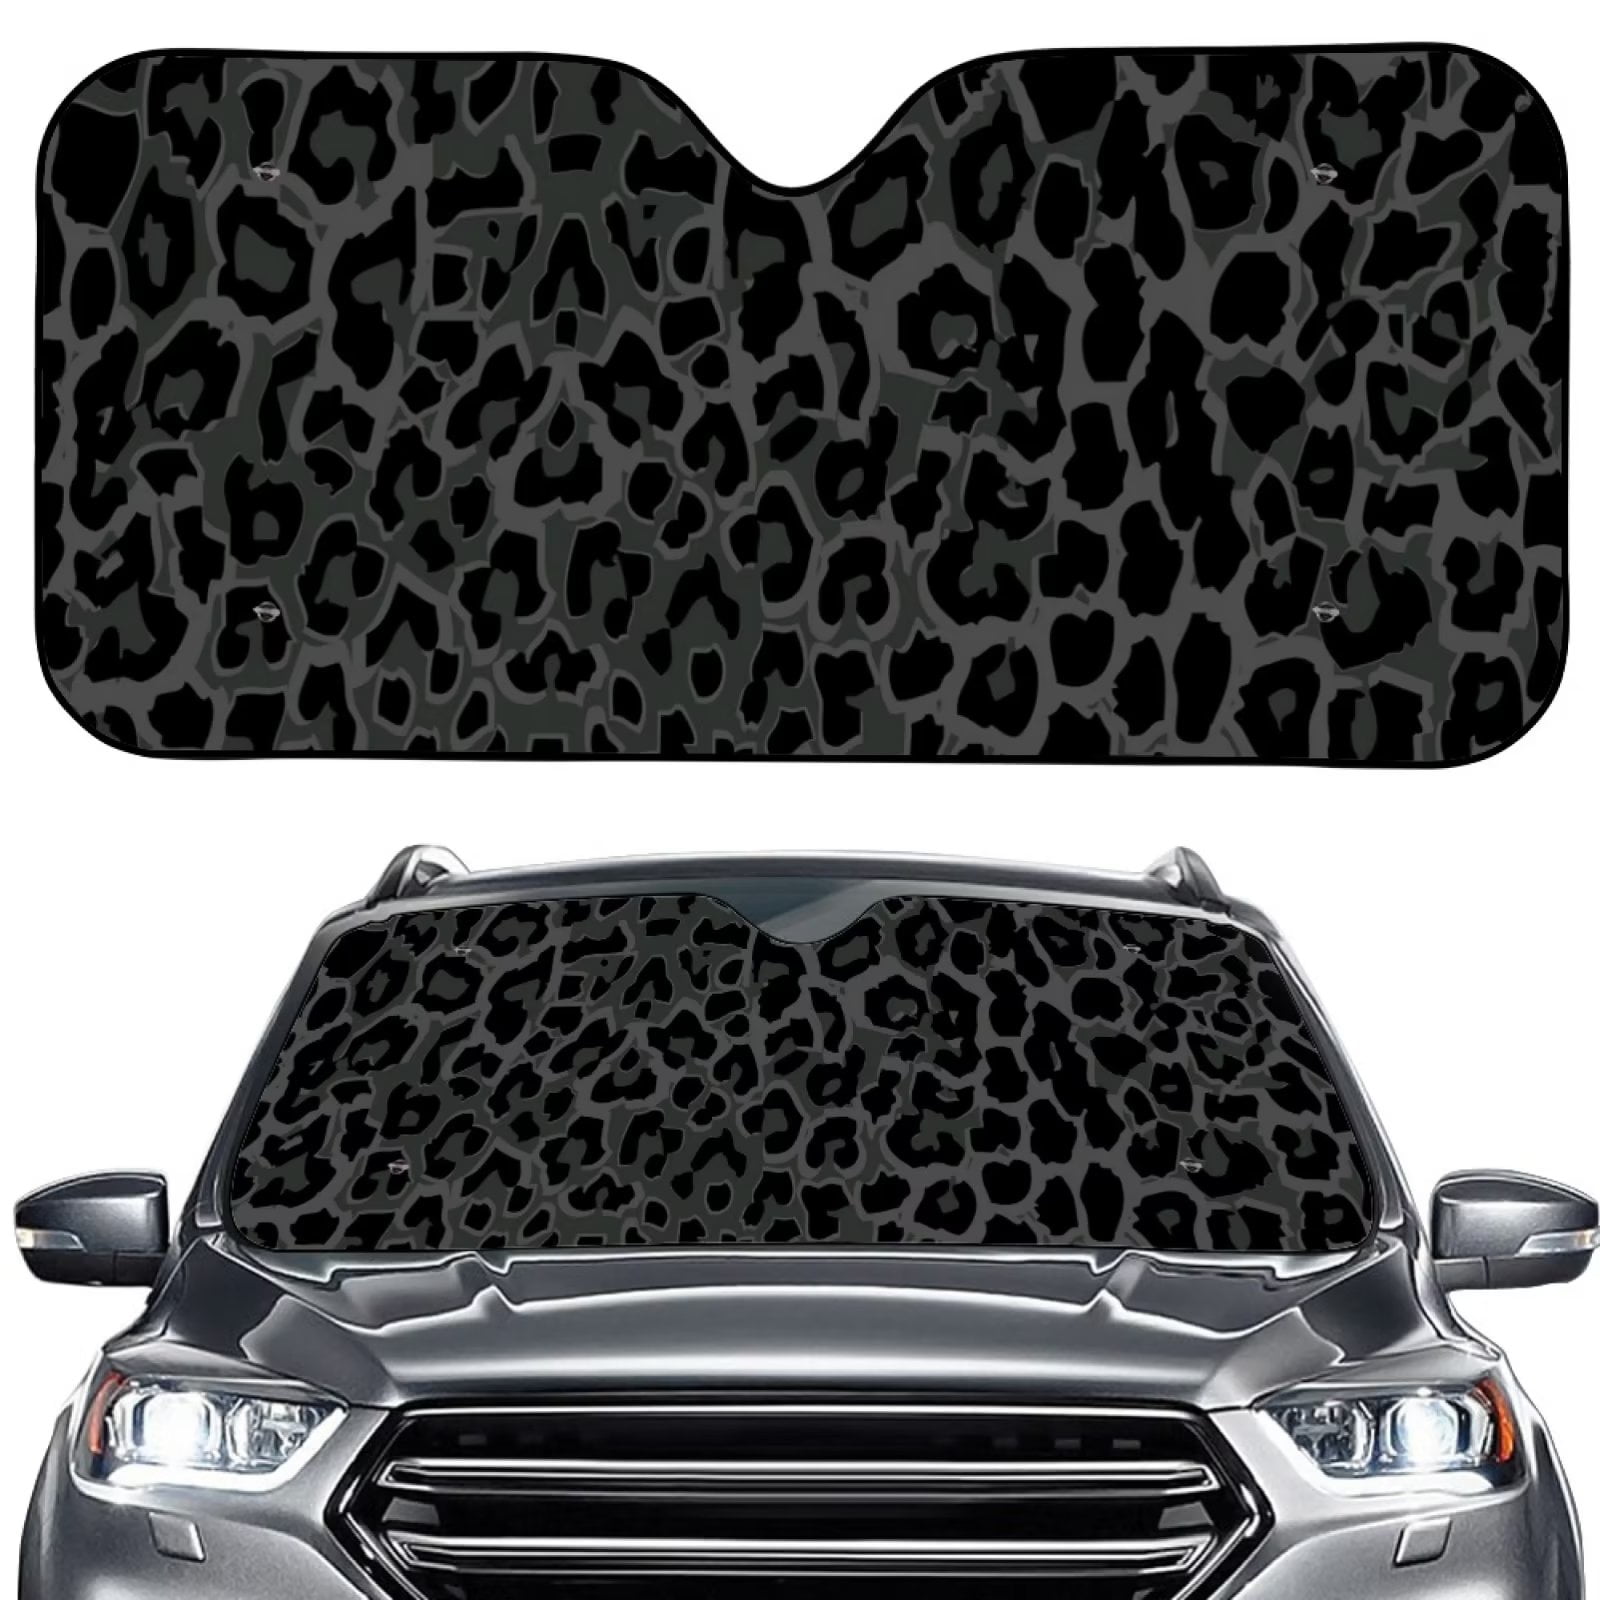  Cozeyat Colorful Leopard Design 2 Pieces Sun Shade Pad for Auto  Front Window Sunsahde,Protect Vehicle Interior Cool,Universal Fit  Trucks,Sedans : Automotive